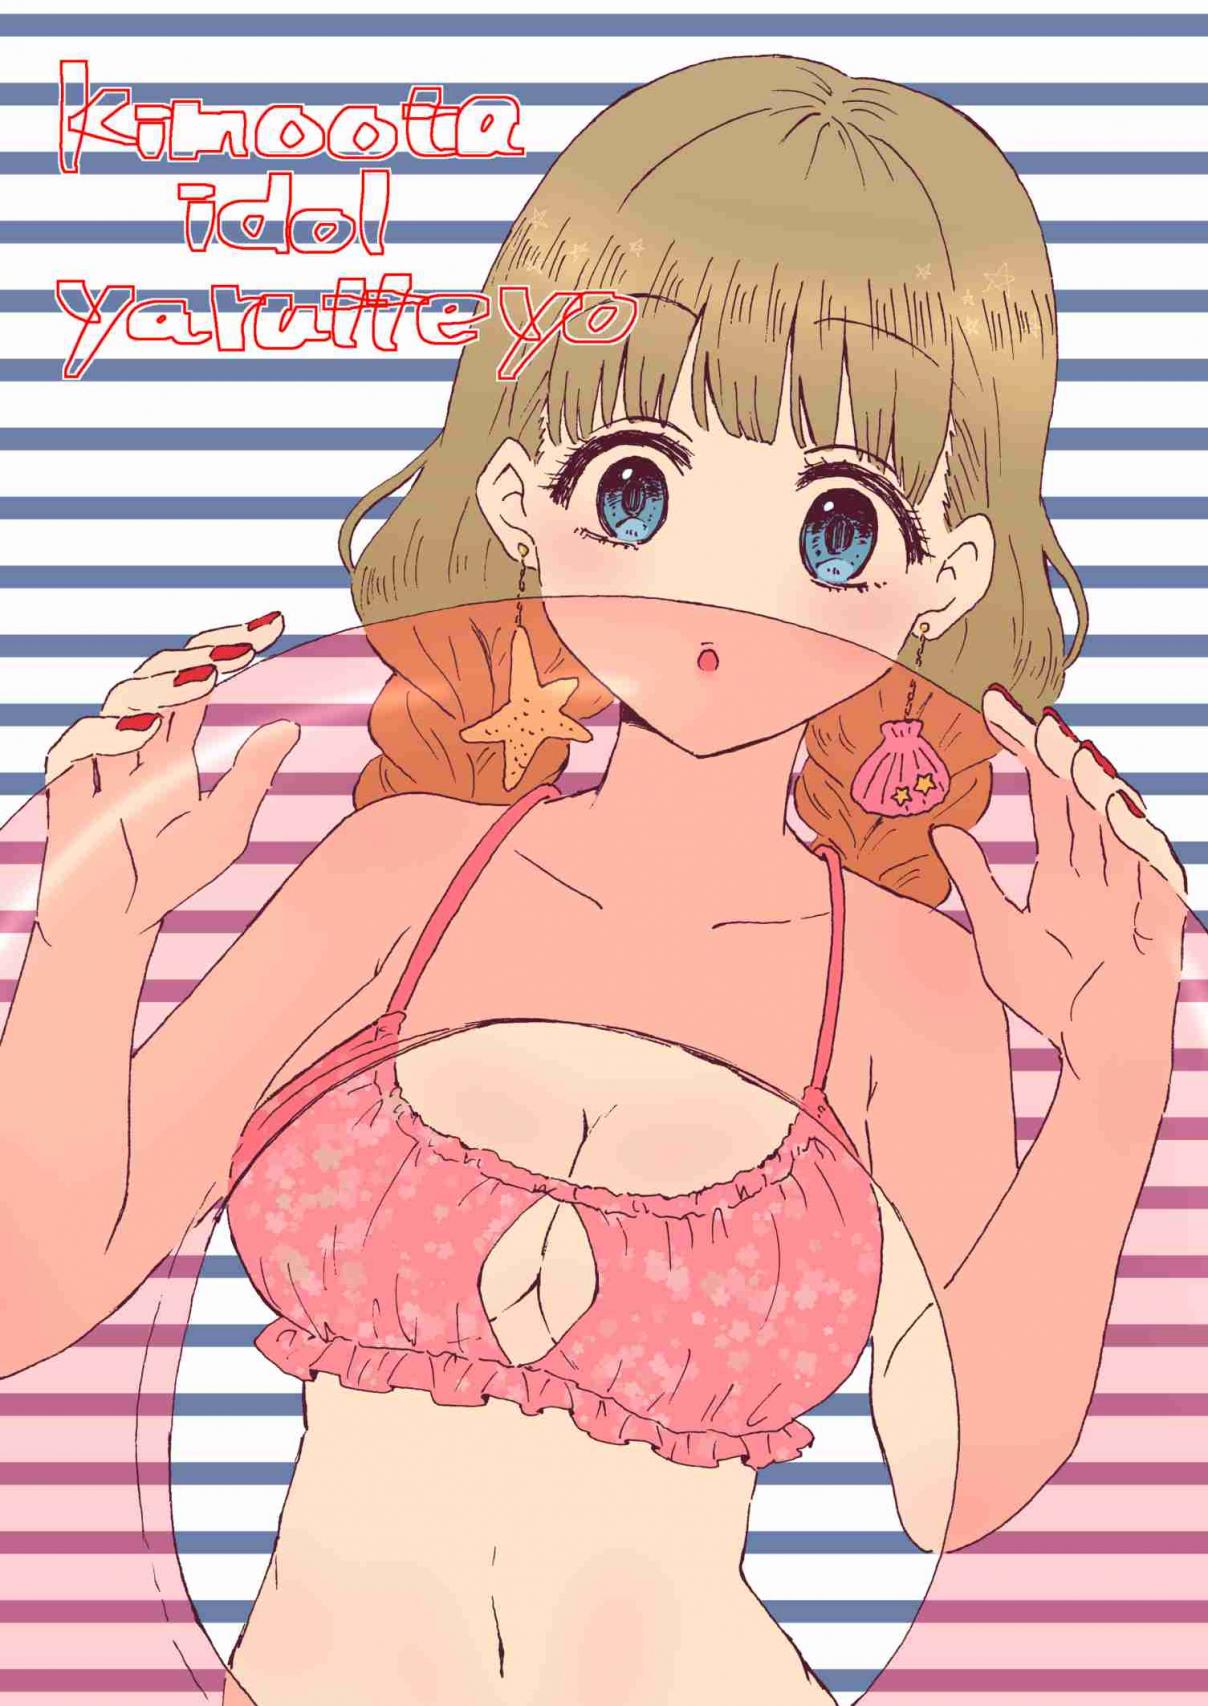 KimoOta, Idol Yarutteyo (Pre Serialization) Ch. 22.5 Bonus Swimsuit Chapter